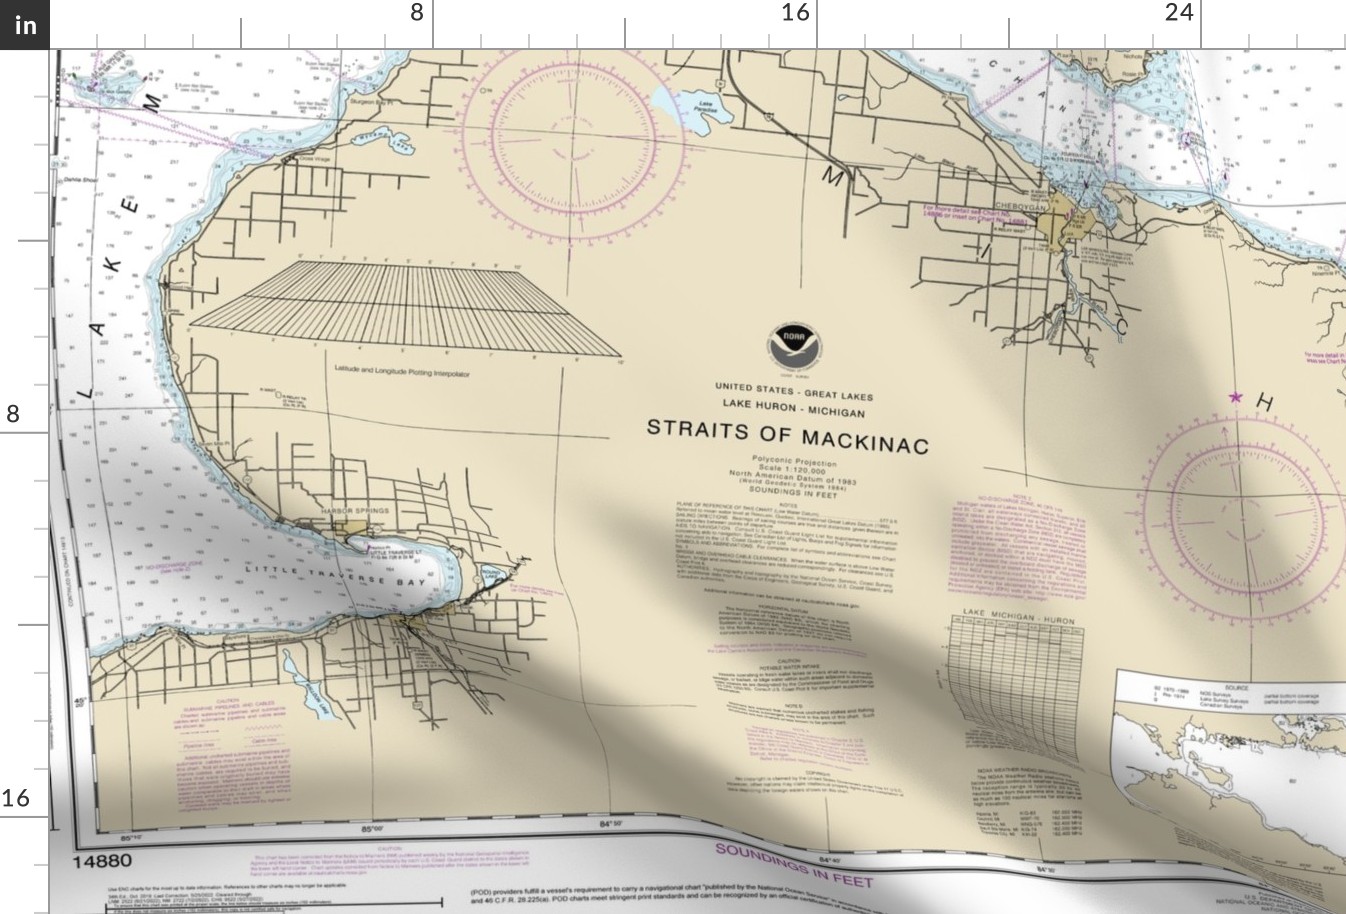 NOAA Straits of Mackinac nautical chart #14880 (48x36" - one chart per yard for wider fabrics)